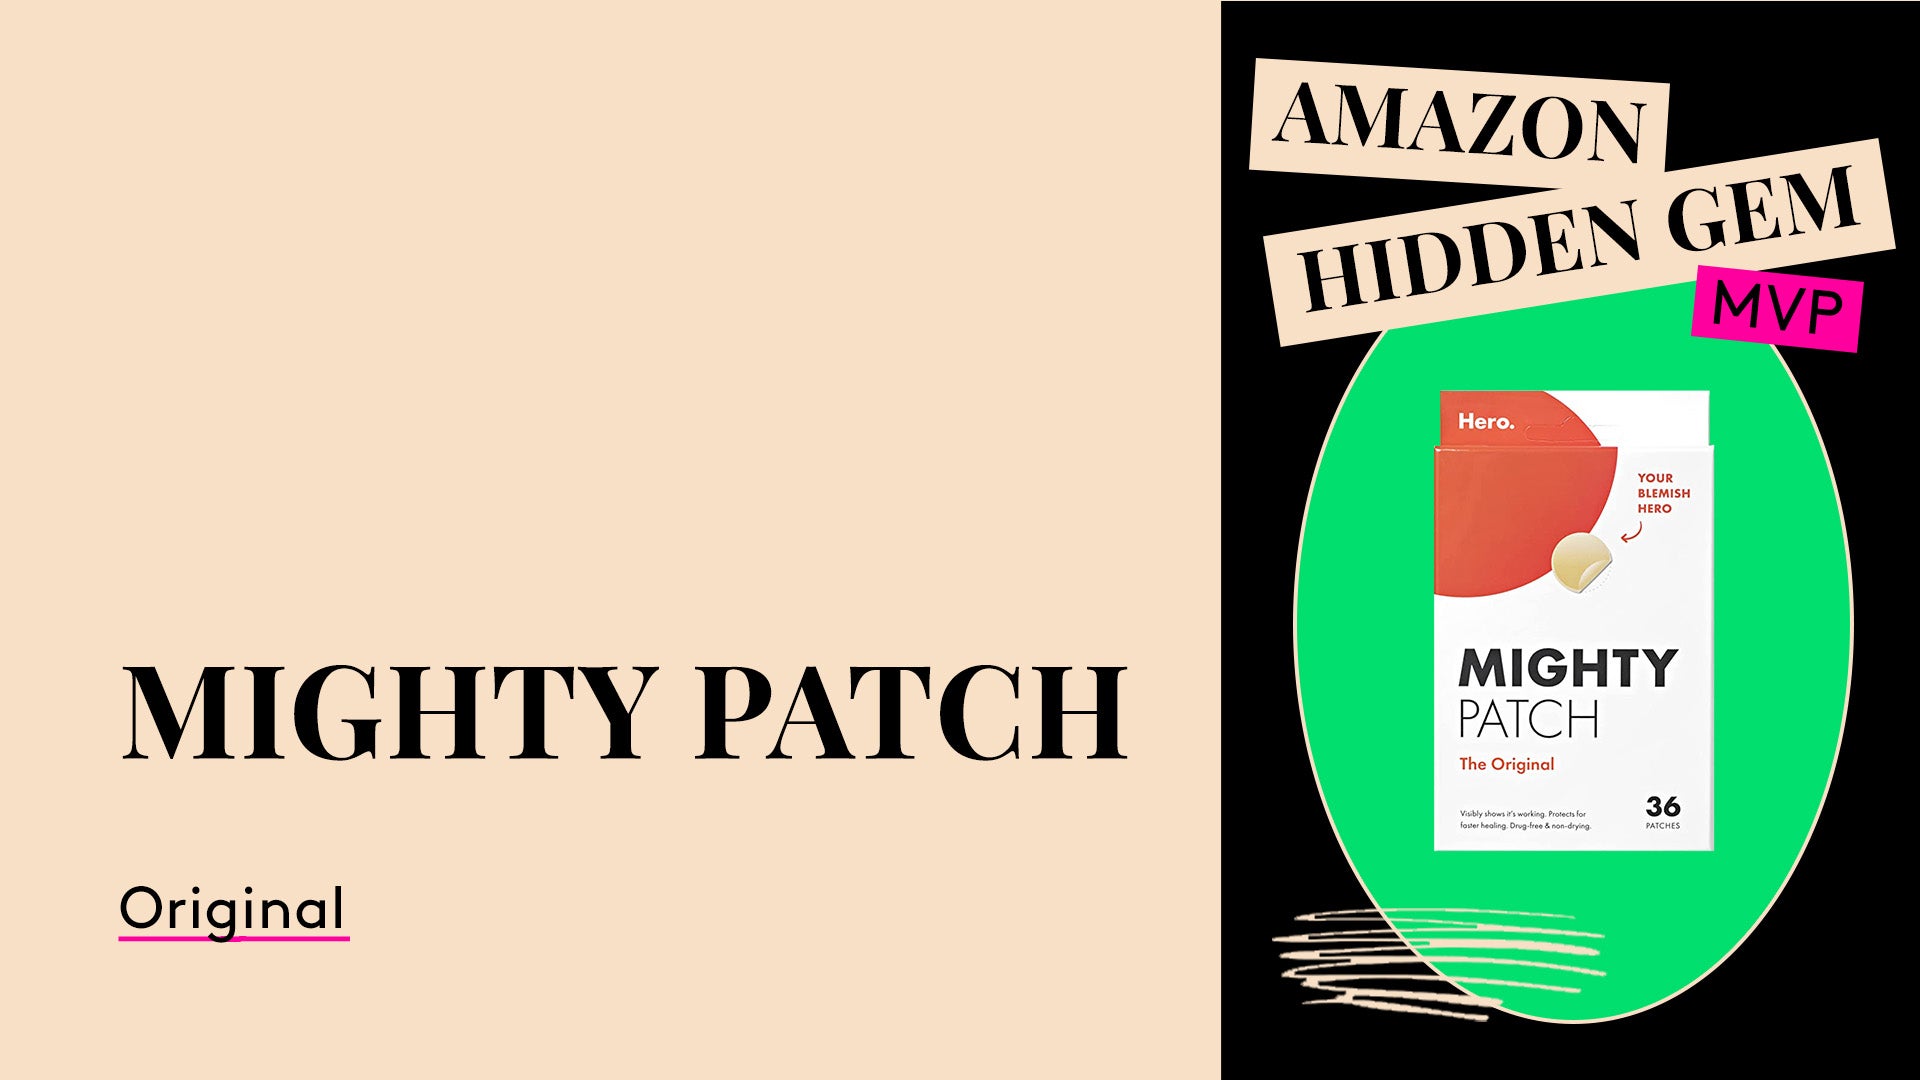 Amazon Hidden Gem MVP. Mighty Patch Original.